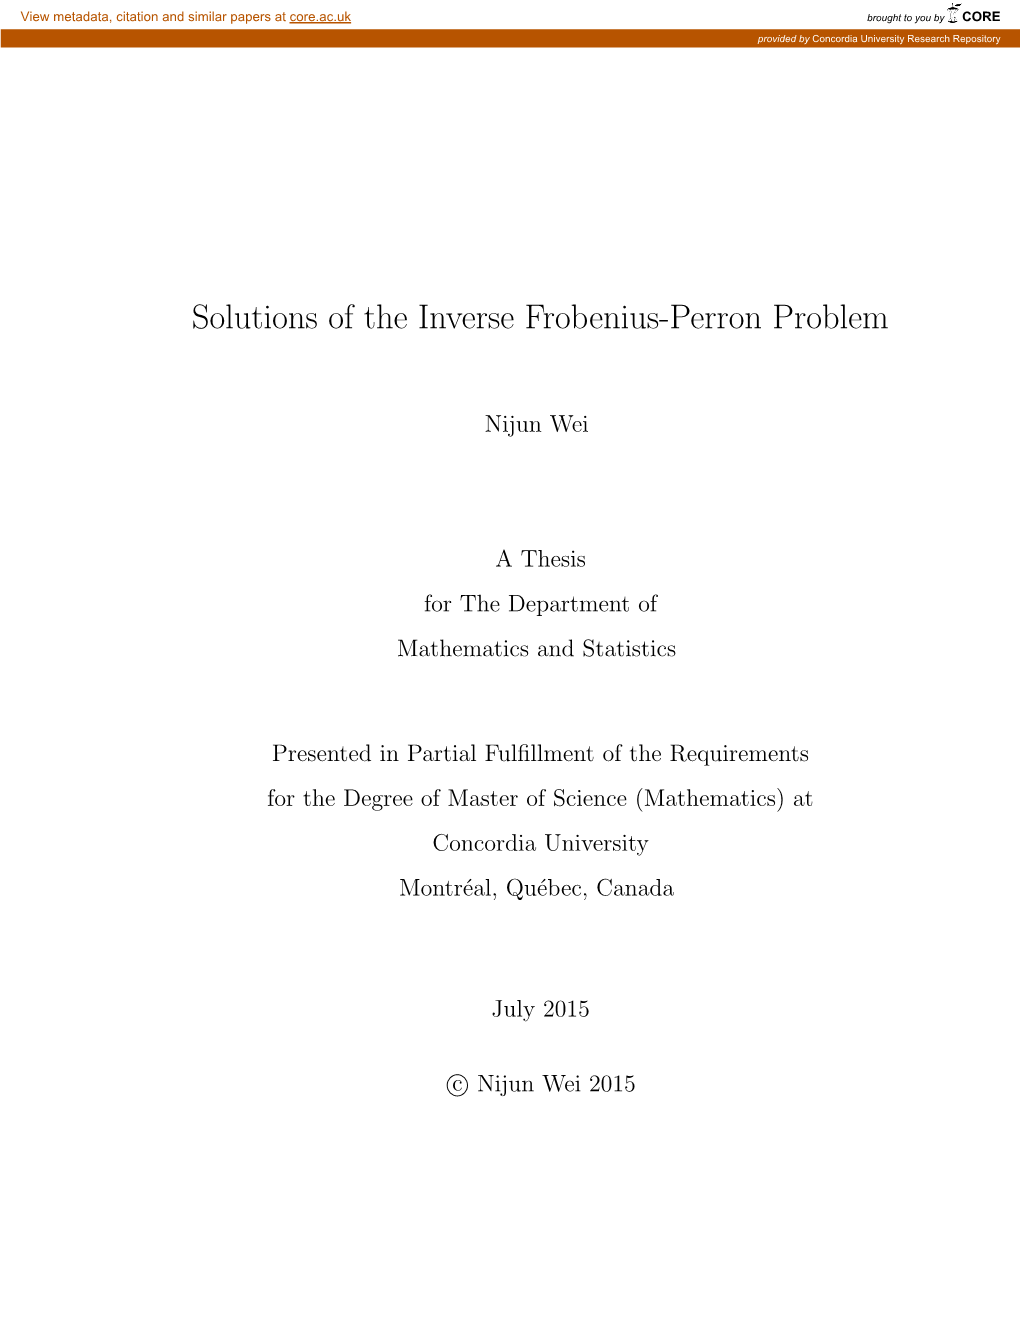 Solutions of the Inverse Frobenius-Perron Problem